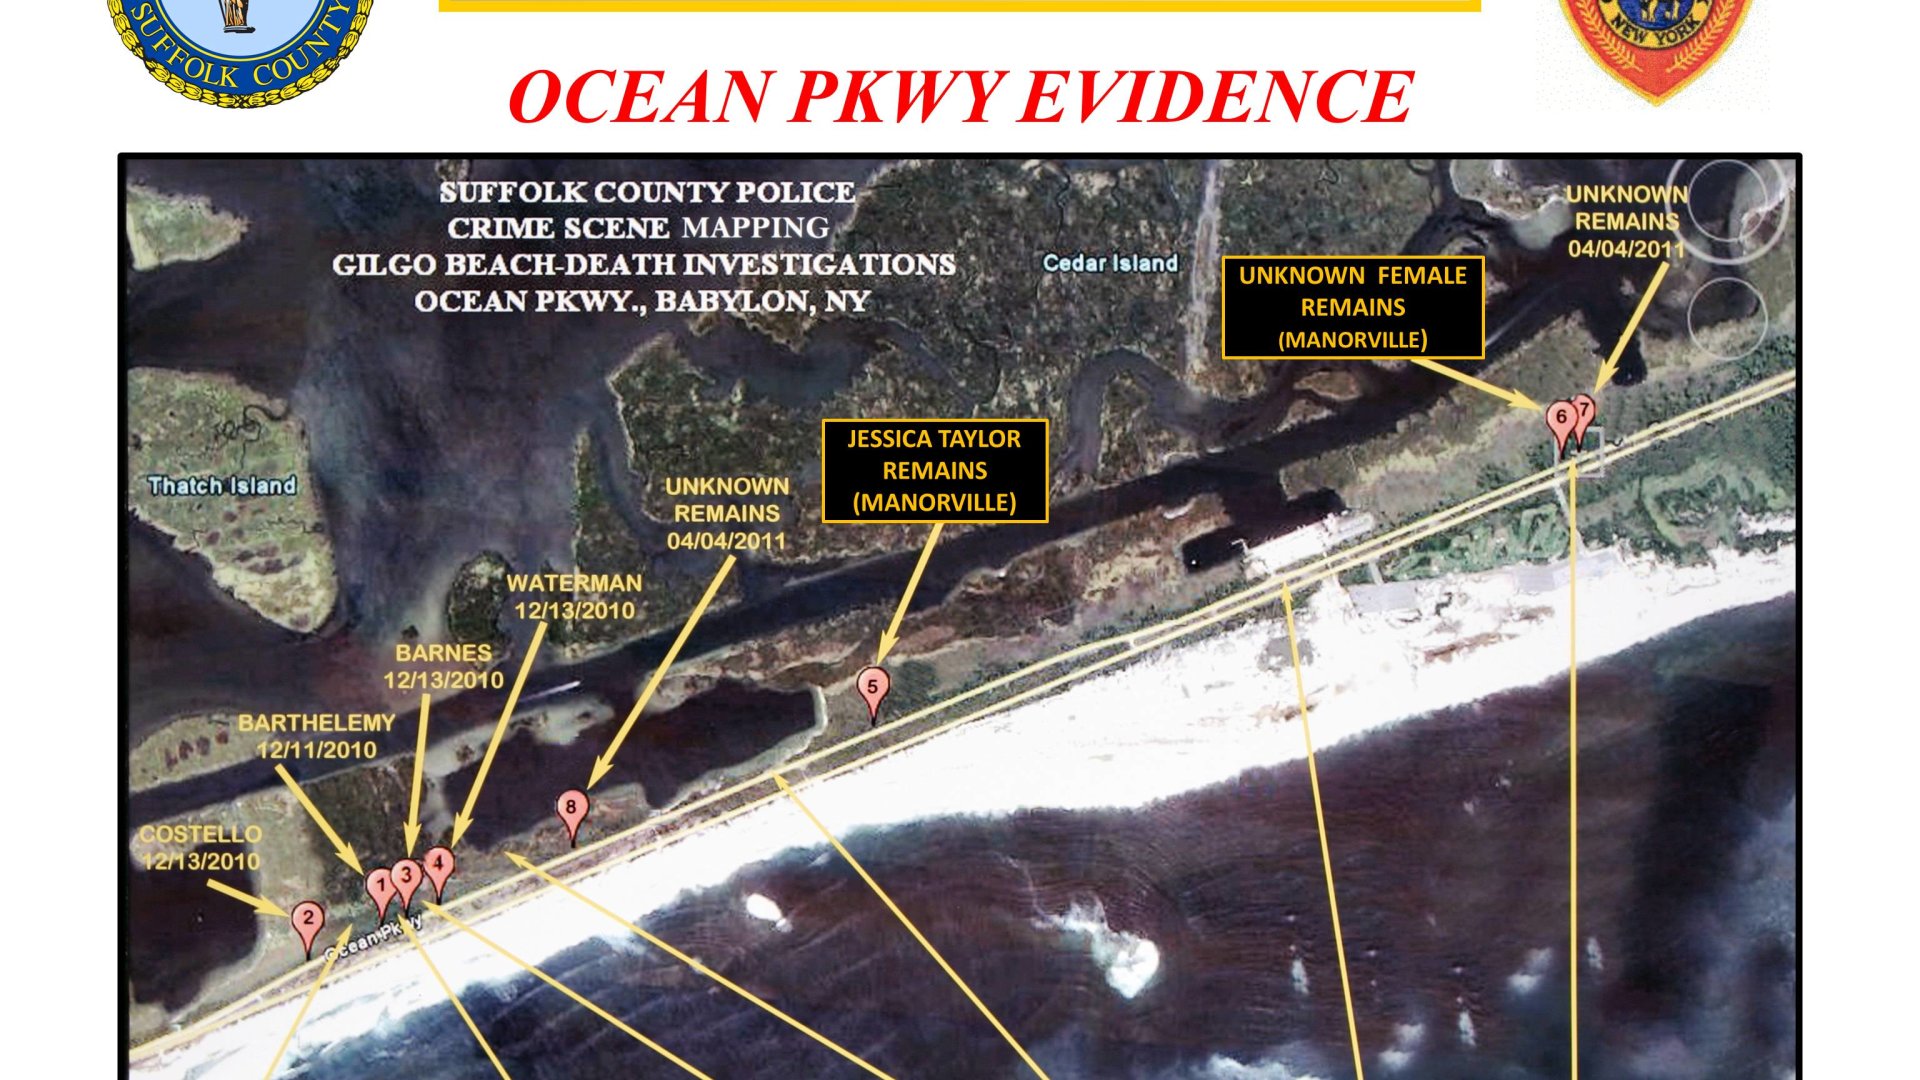 Ocean Pkwy Evidence handout